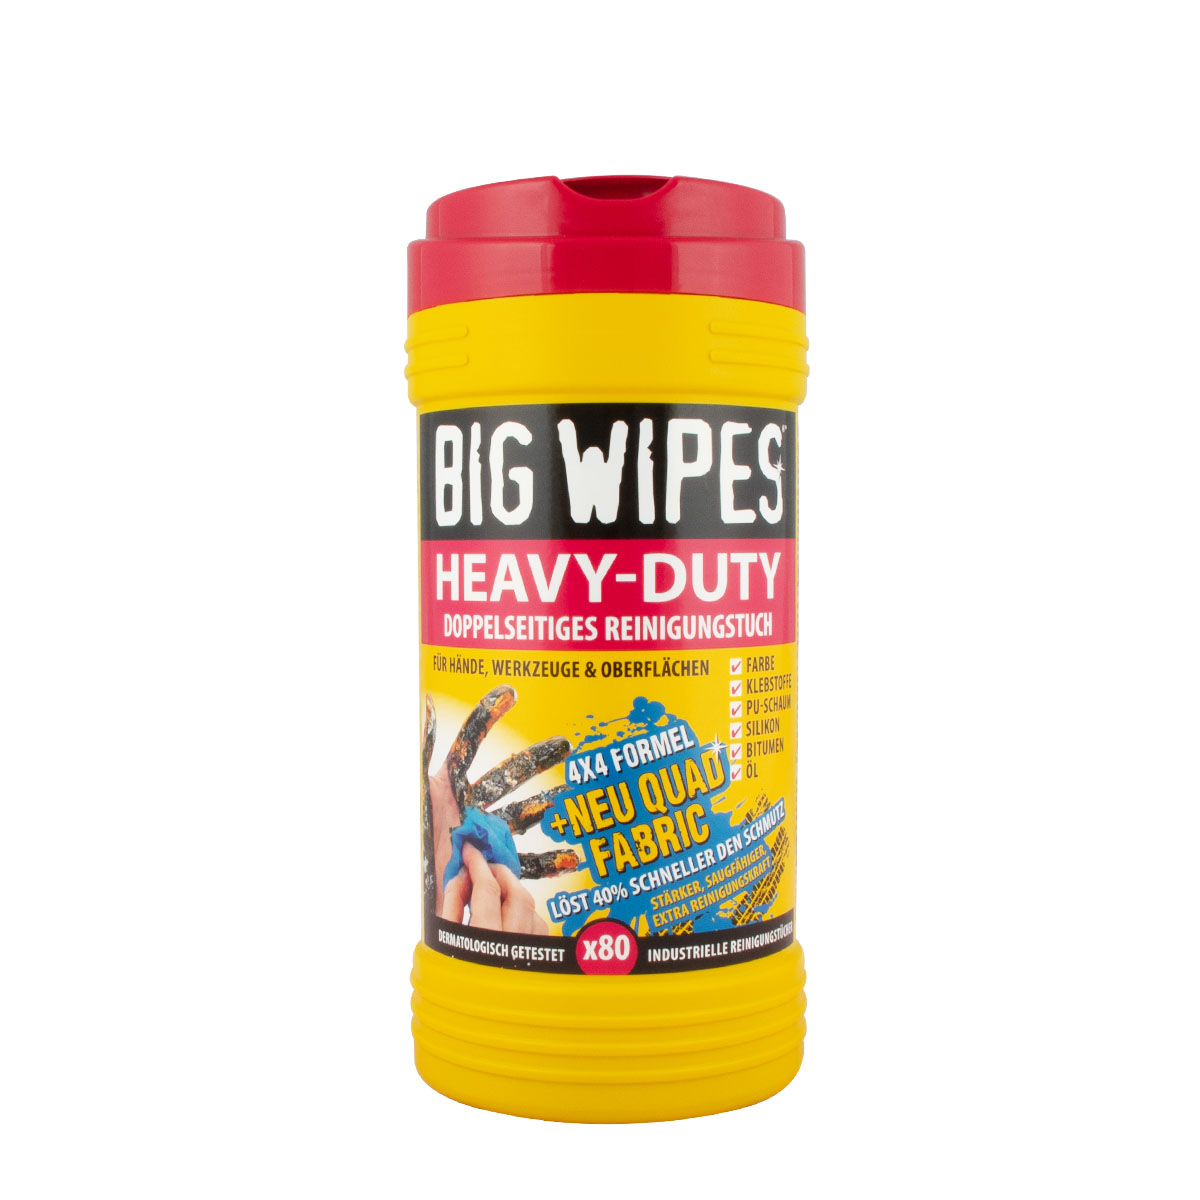 Big Wipes Heavy Duty Doppelseitige Reinigungstücher 80 Stück